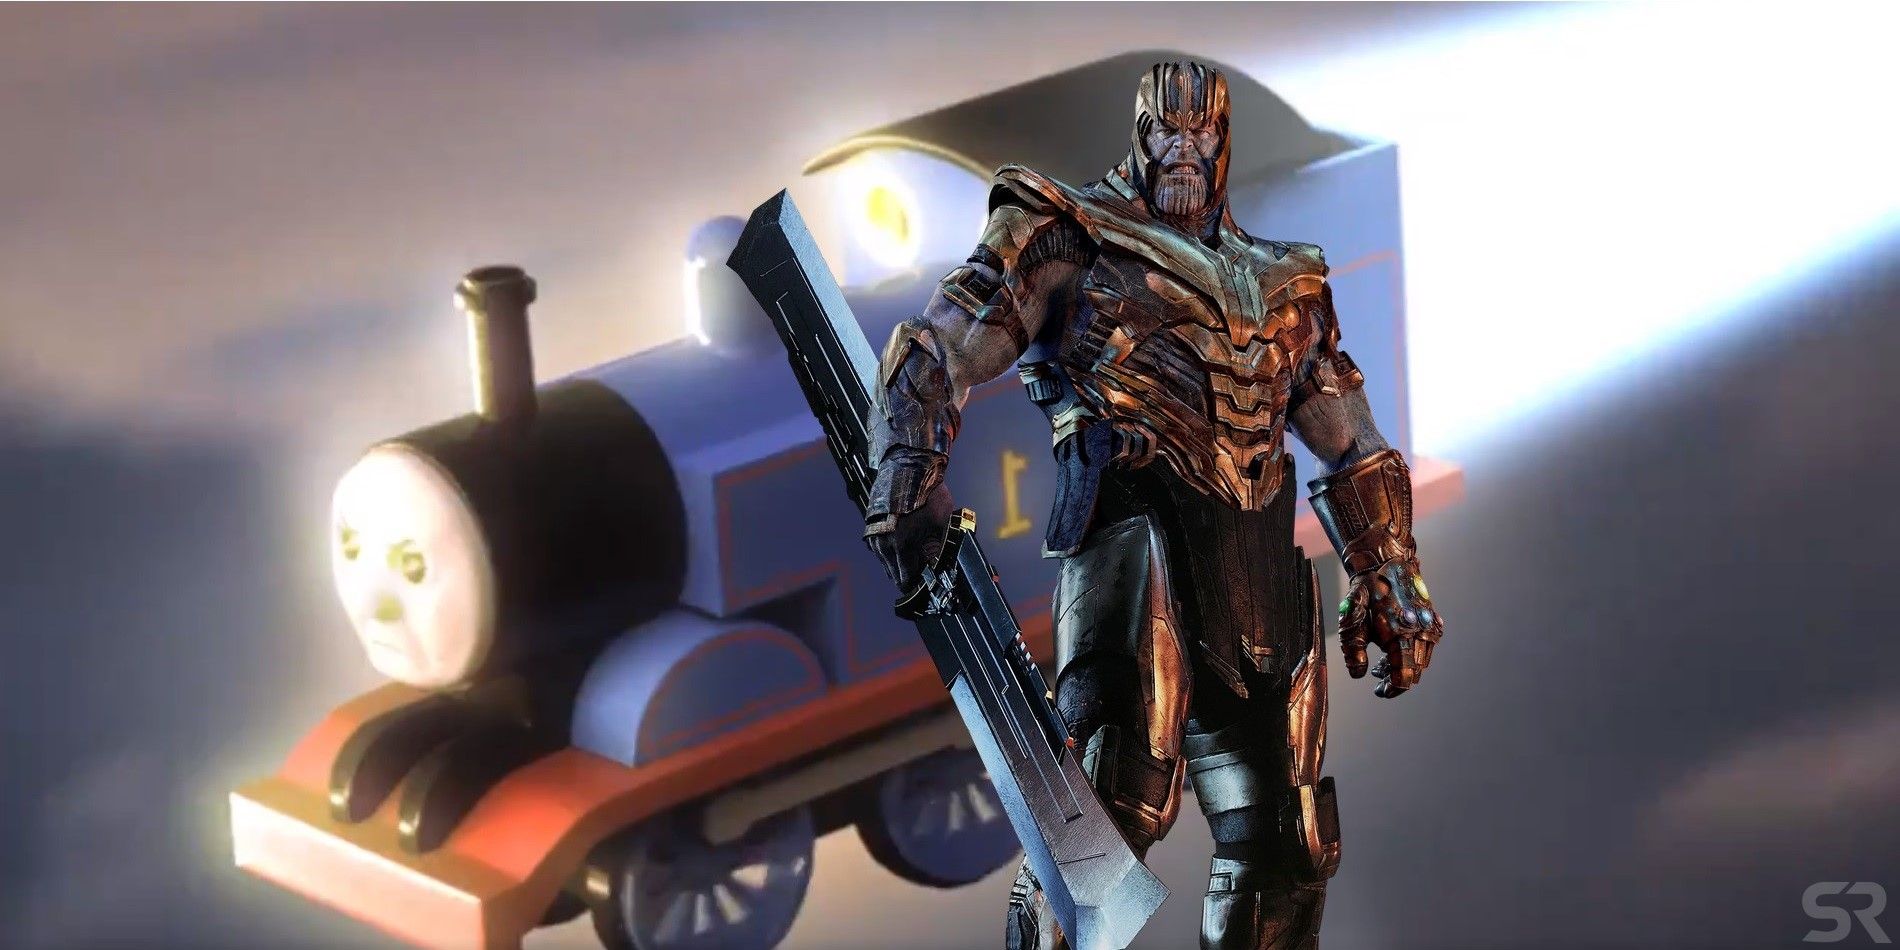 Thomas the Tank Engine zooms in Avengers: Endgame